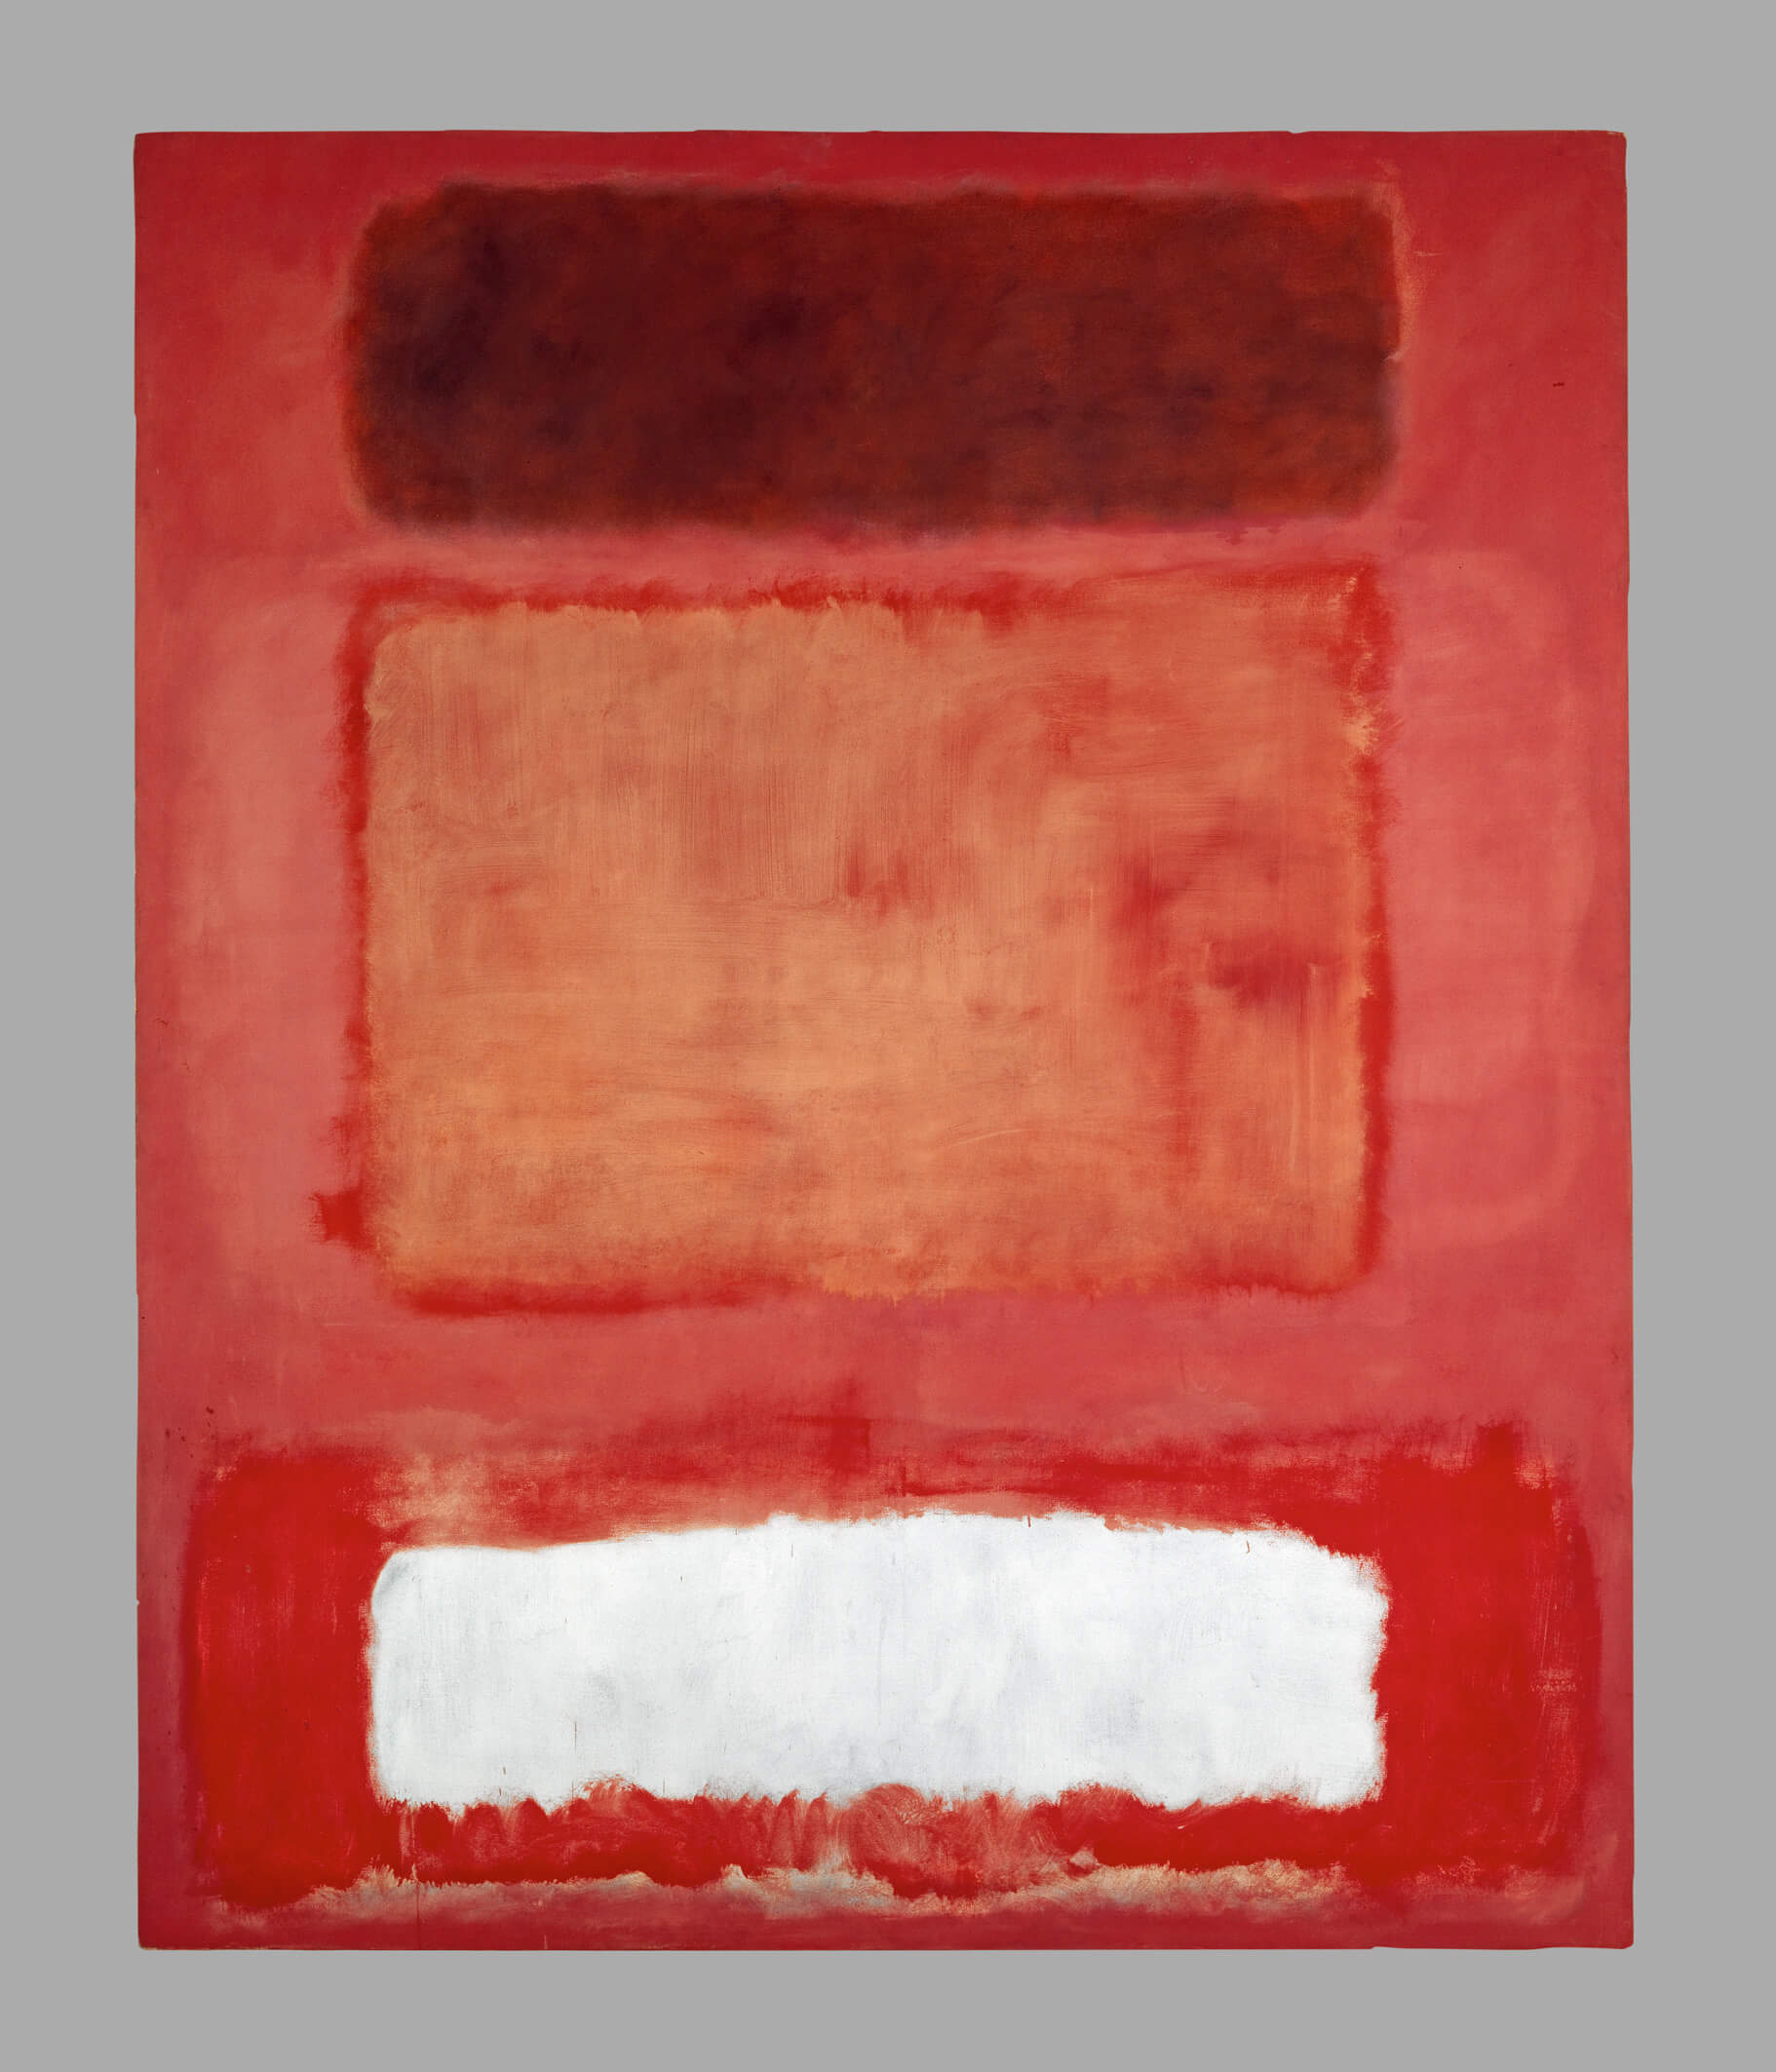 Mark Rothko (1903-1970)
No. 16 (Red, White and Brown)
1957
Öl auf Leinwand
252,2 × 207 cm
© 1998 Kate Rothko Prizel & Christopher Rothko/Bildrecht, Wien, 2019
© Foto: Kunstmuseum Basel